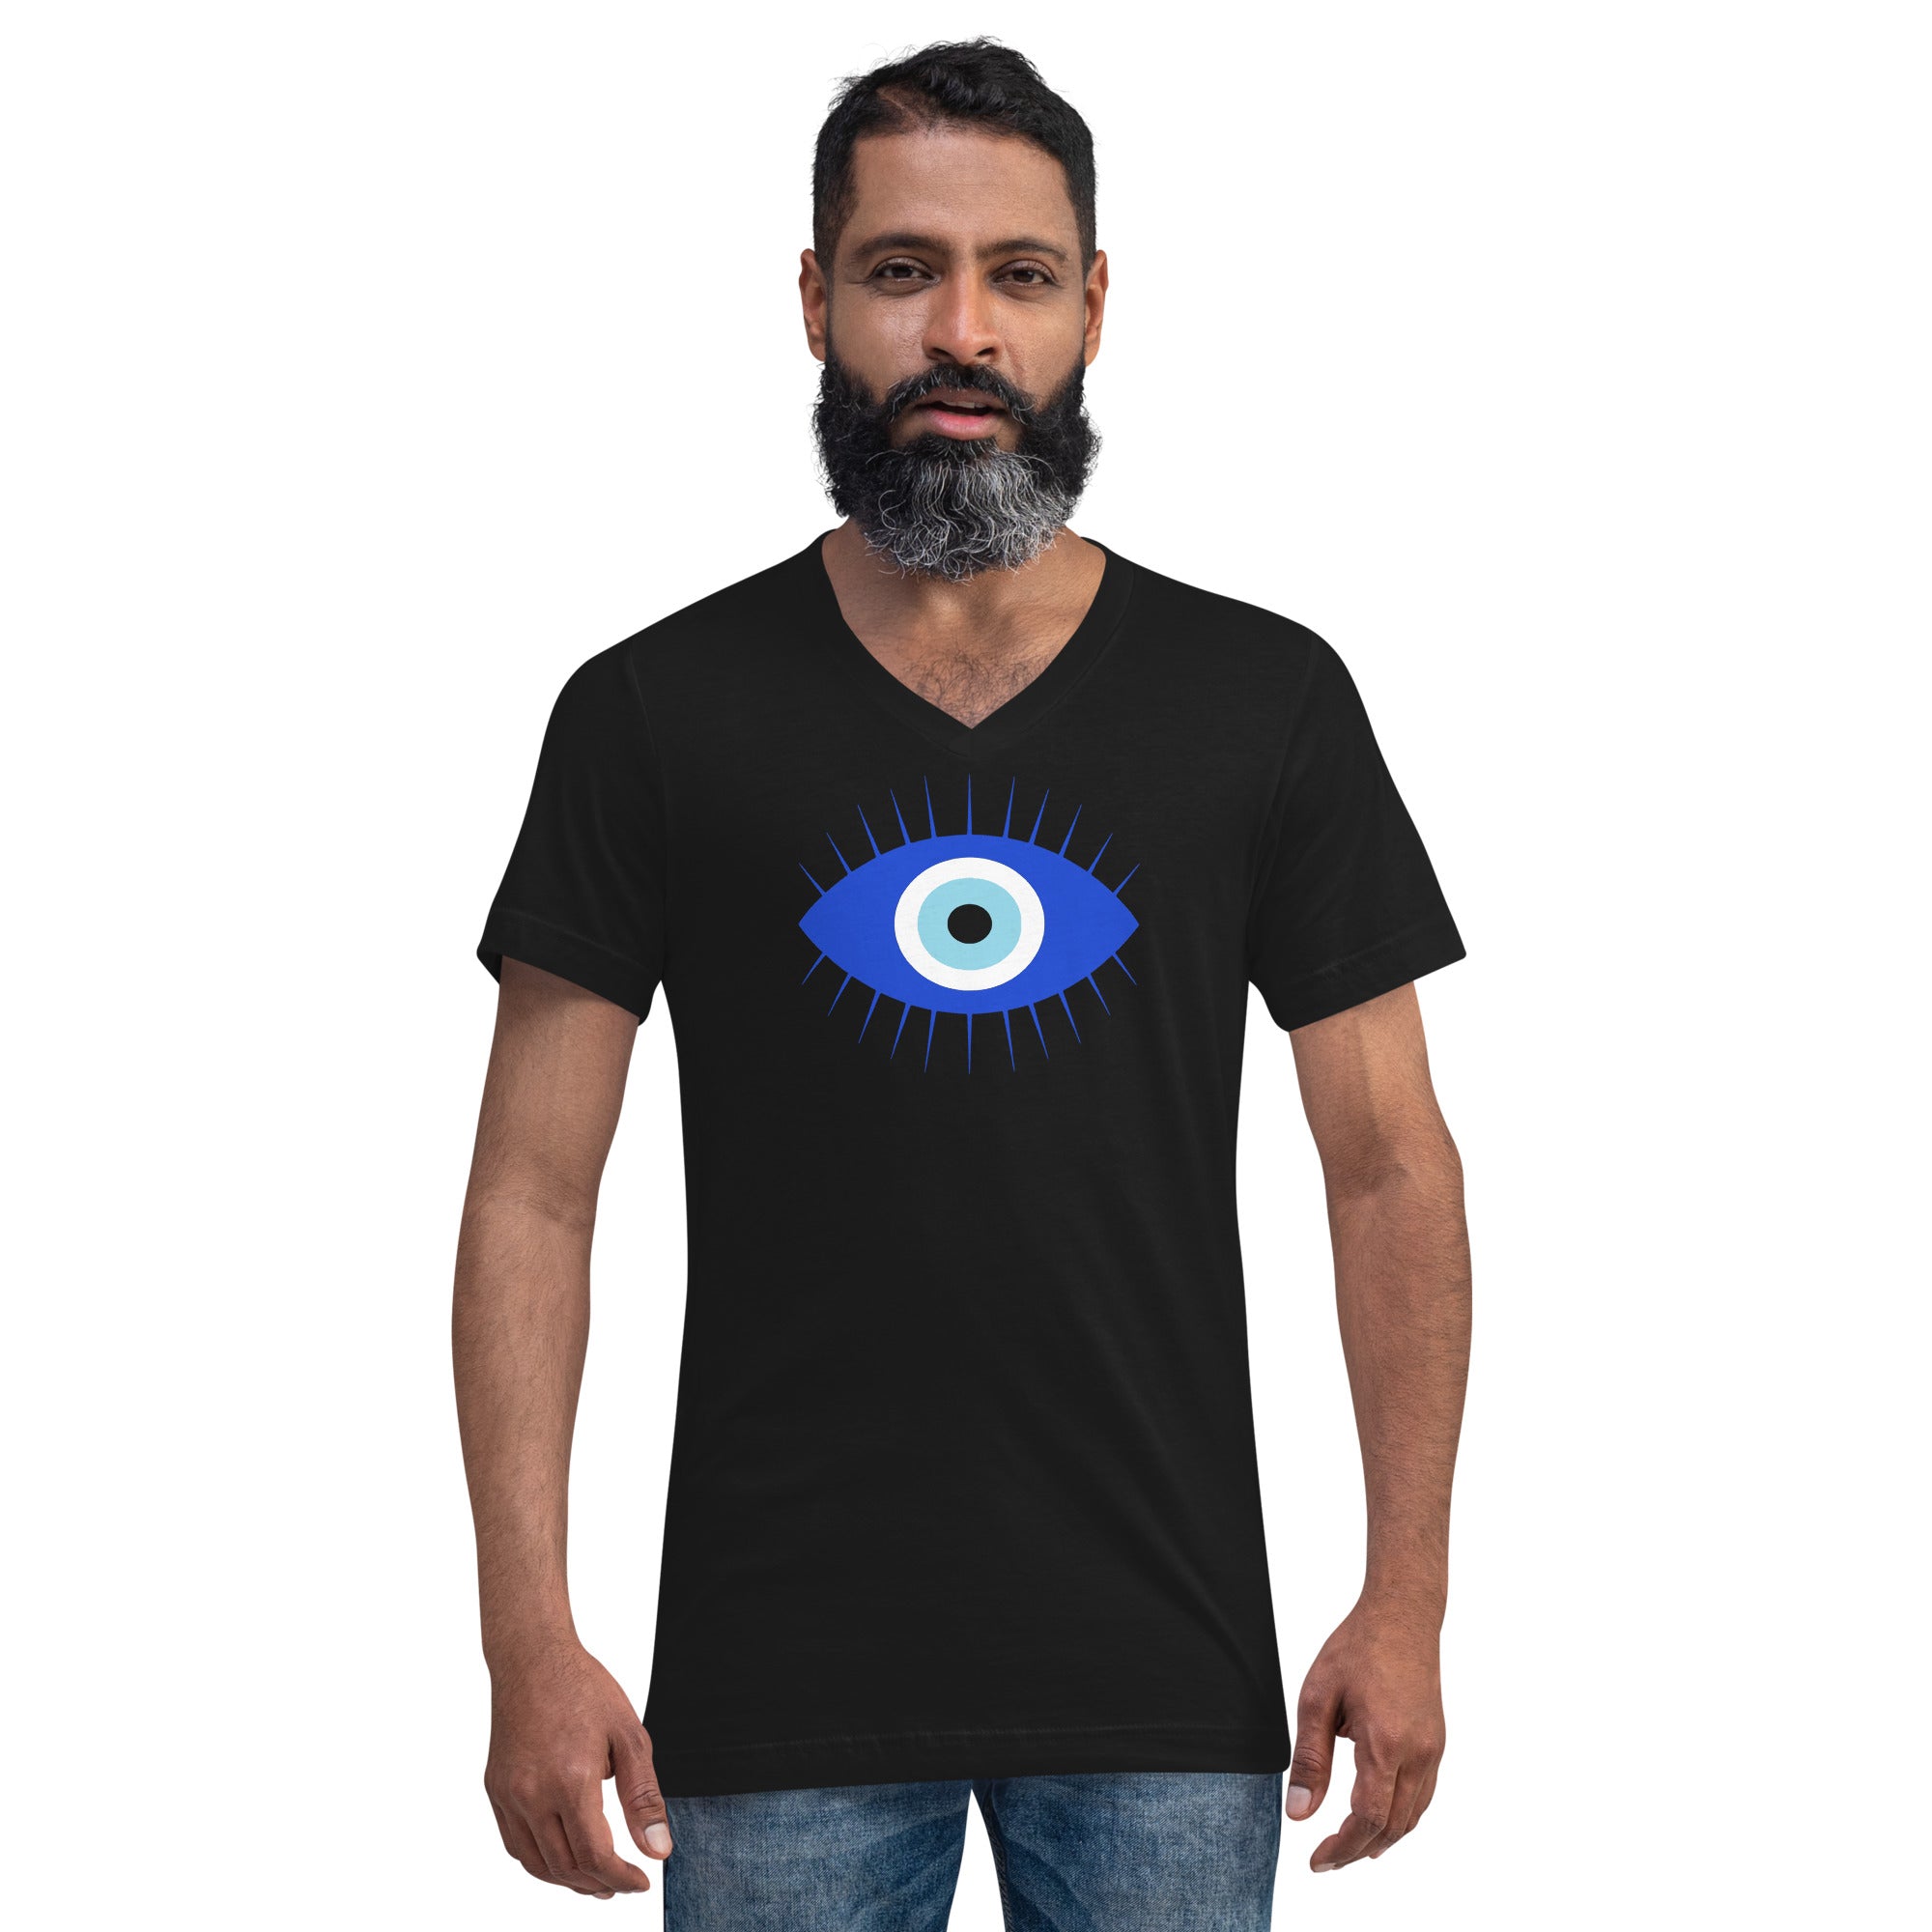 Curse of the Evil Eye Spell of Misfortune Short Sleeve V-Neck T-Shirt